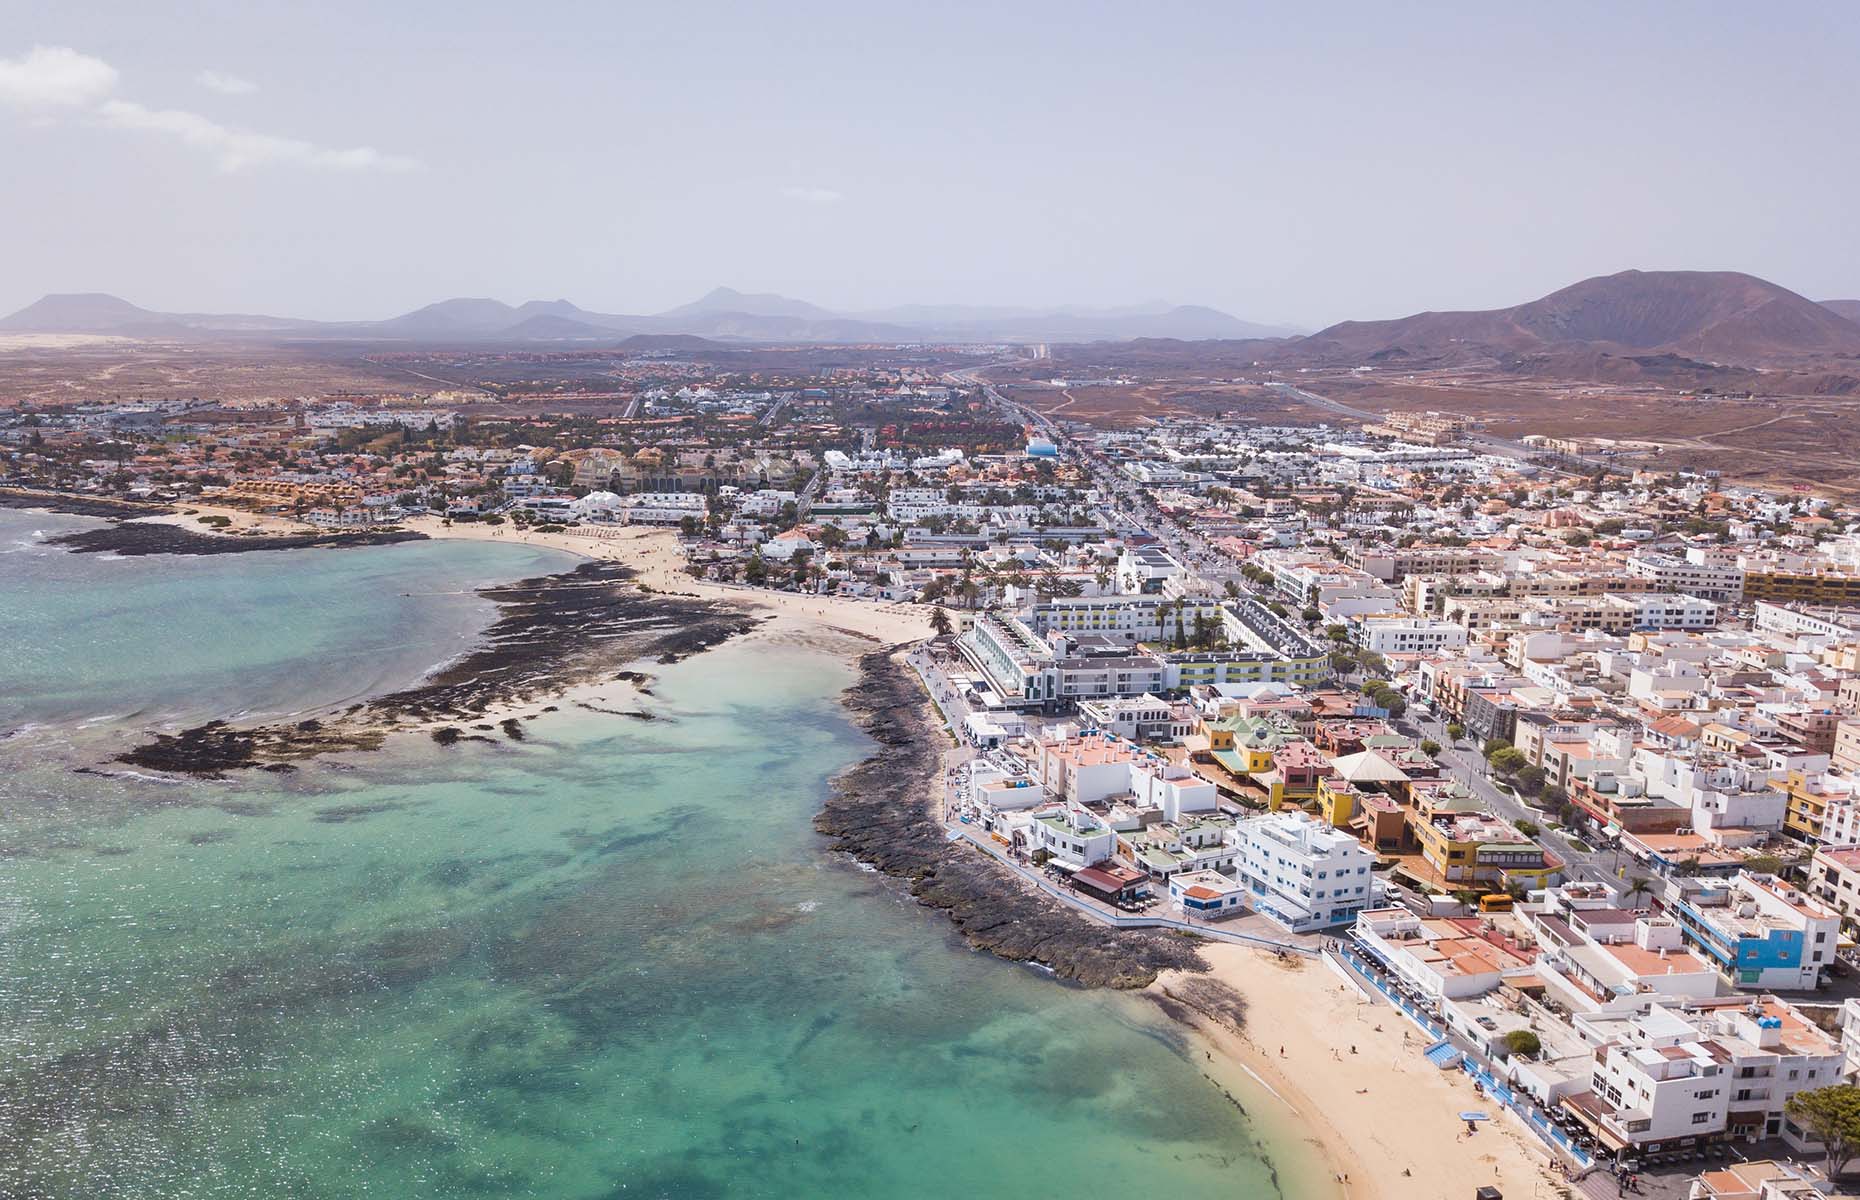 Corralejo in Fuerteventura (Image: Song_about_summer/Shutterstock)